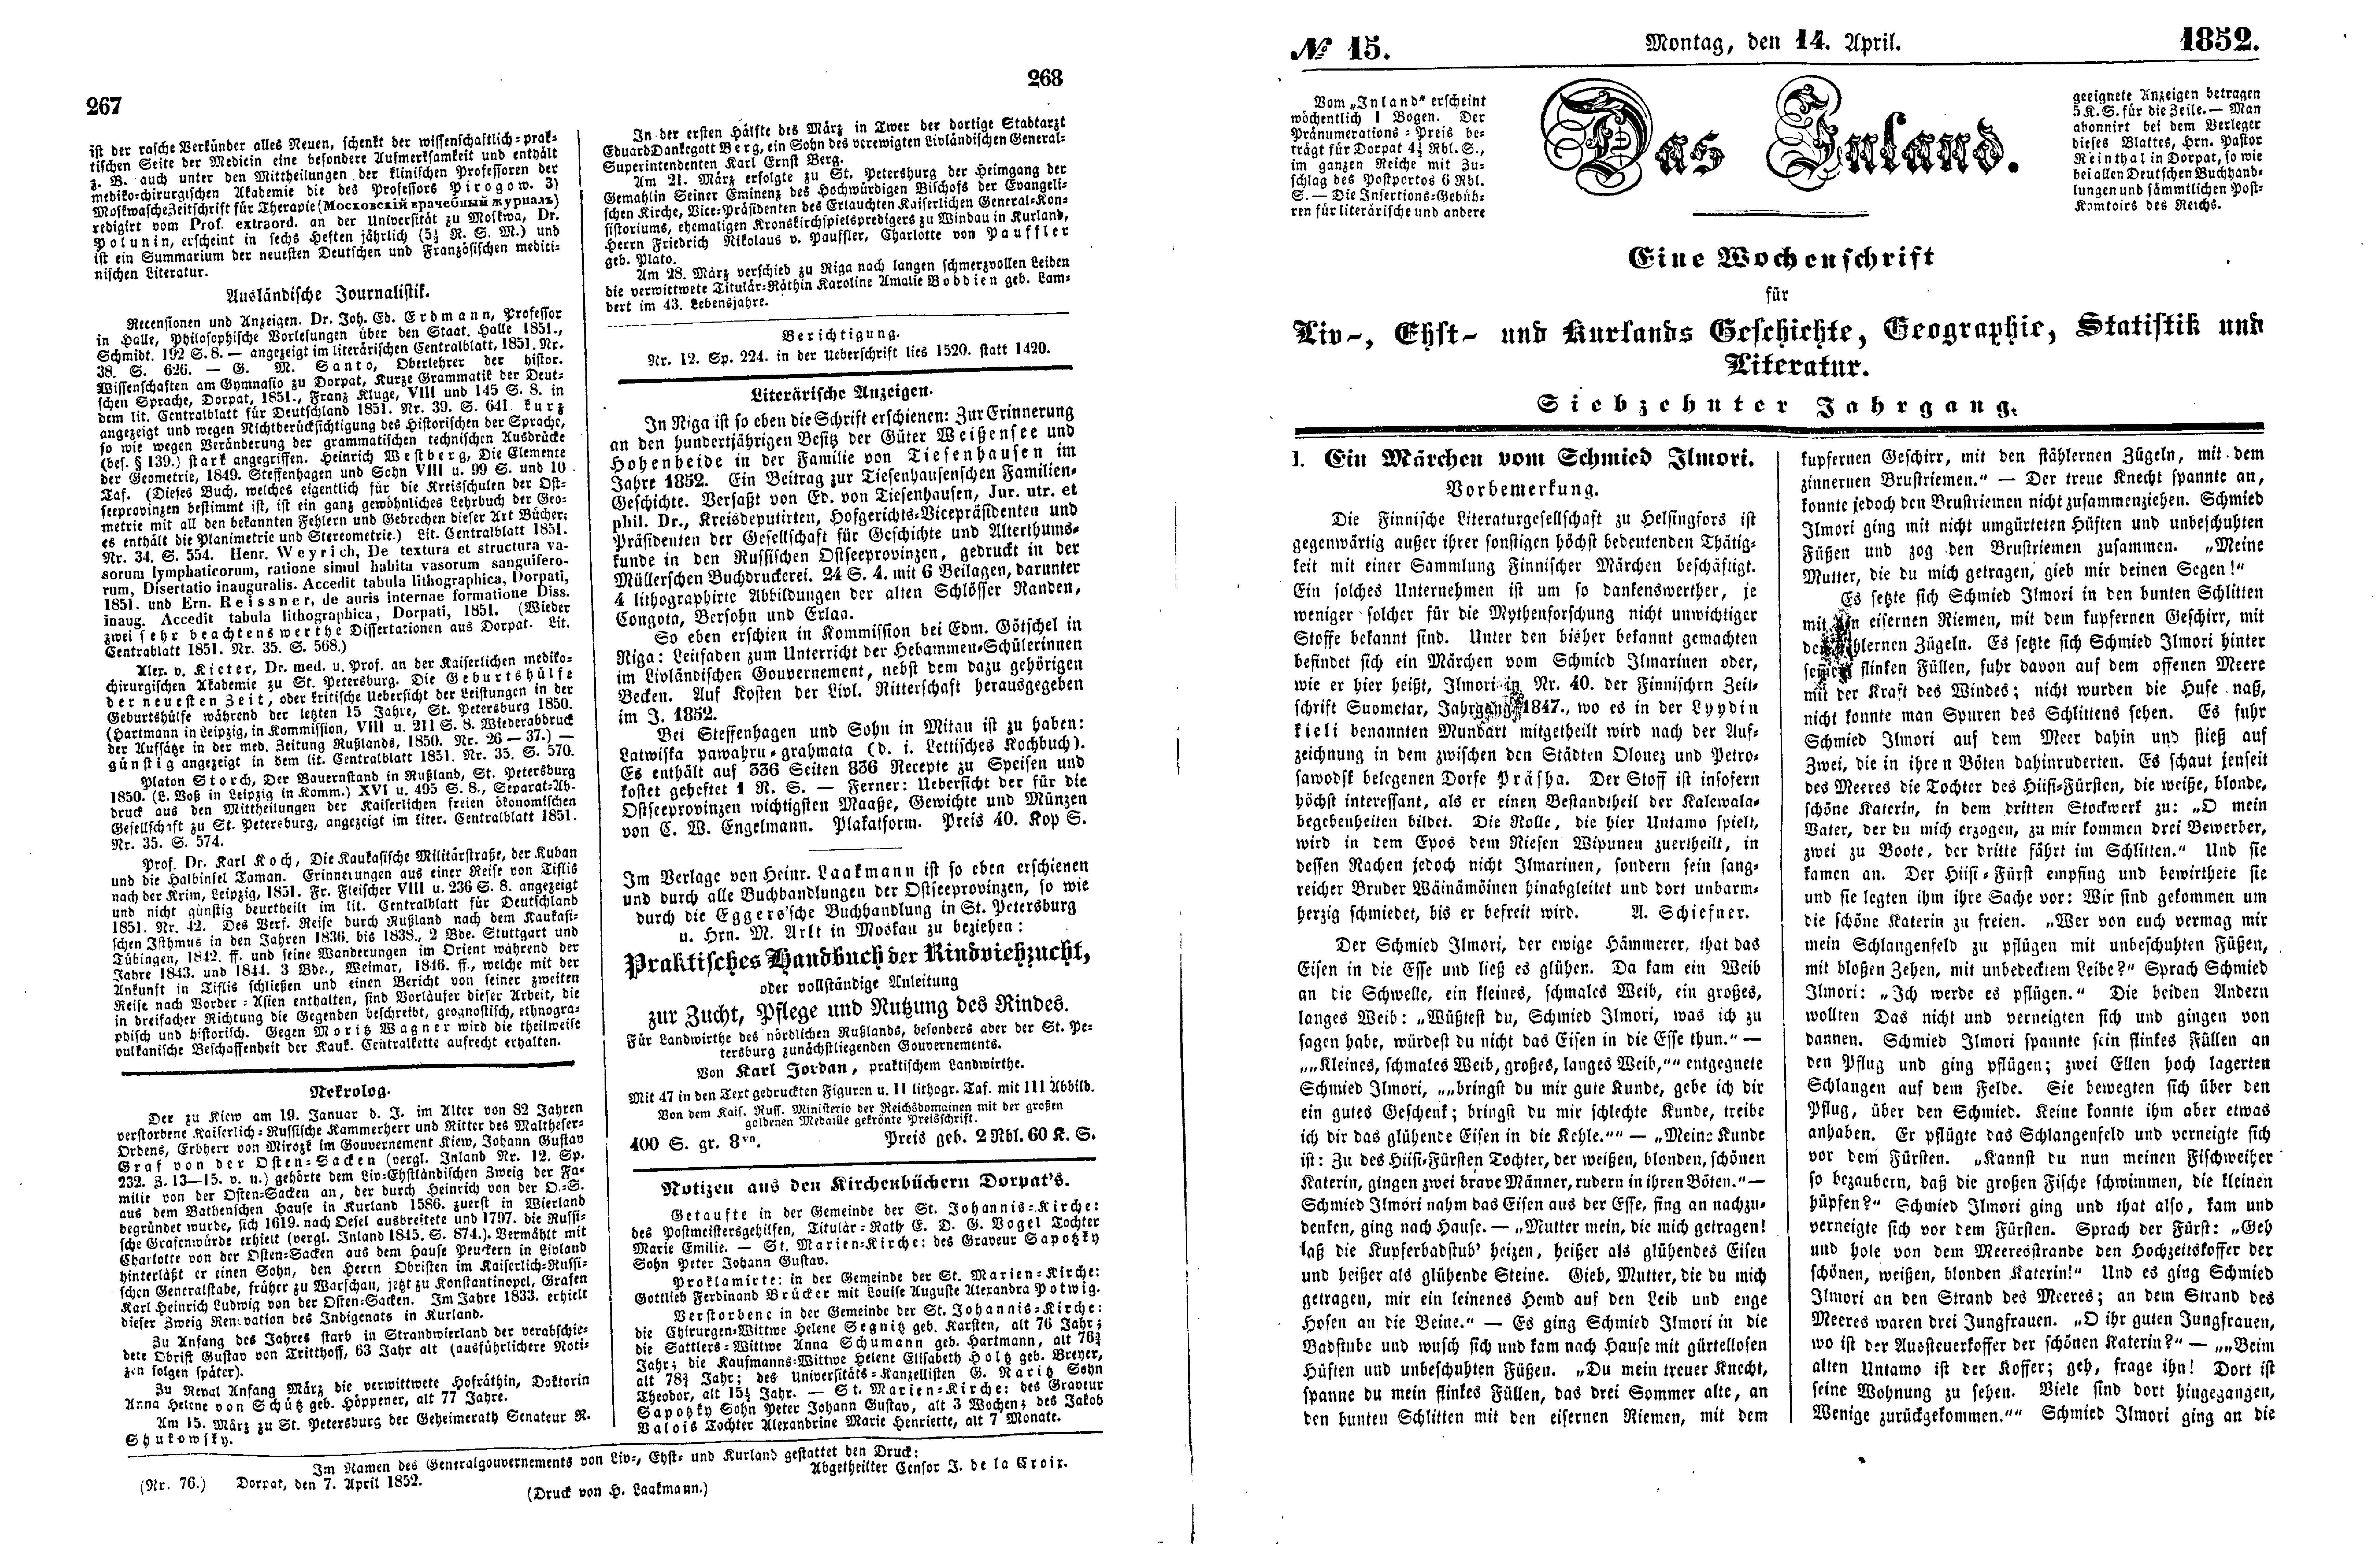 Das Inland [17] (1852) | 71. (267-270) Main body of text